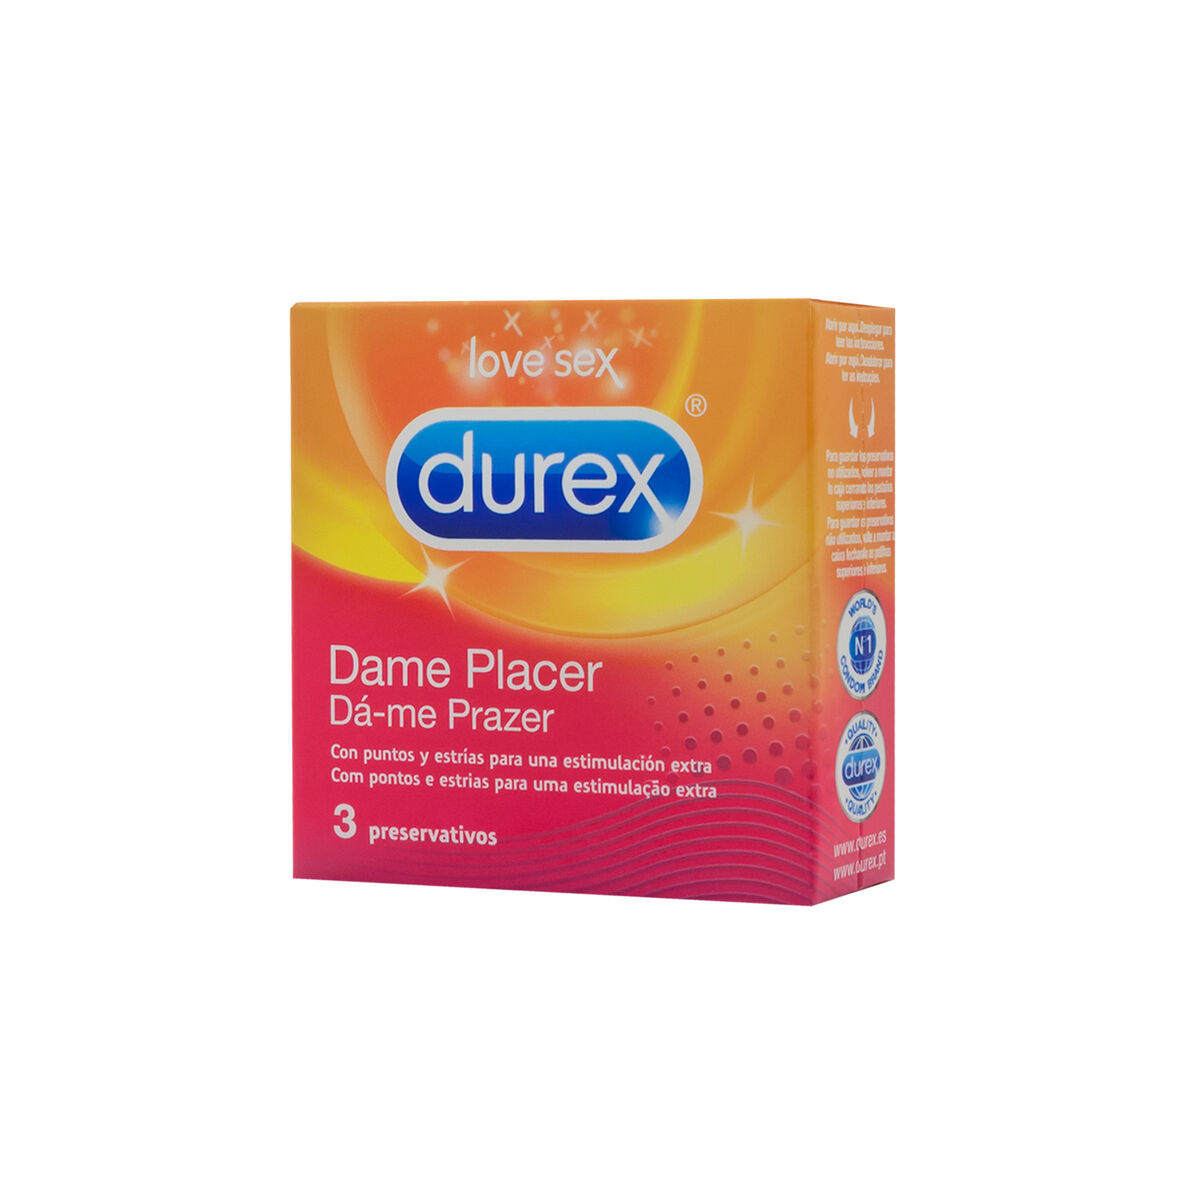 Kondome Dame Placer Durex 3 uds